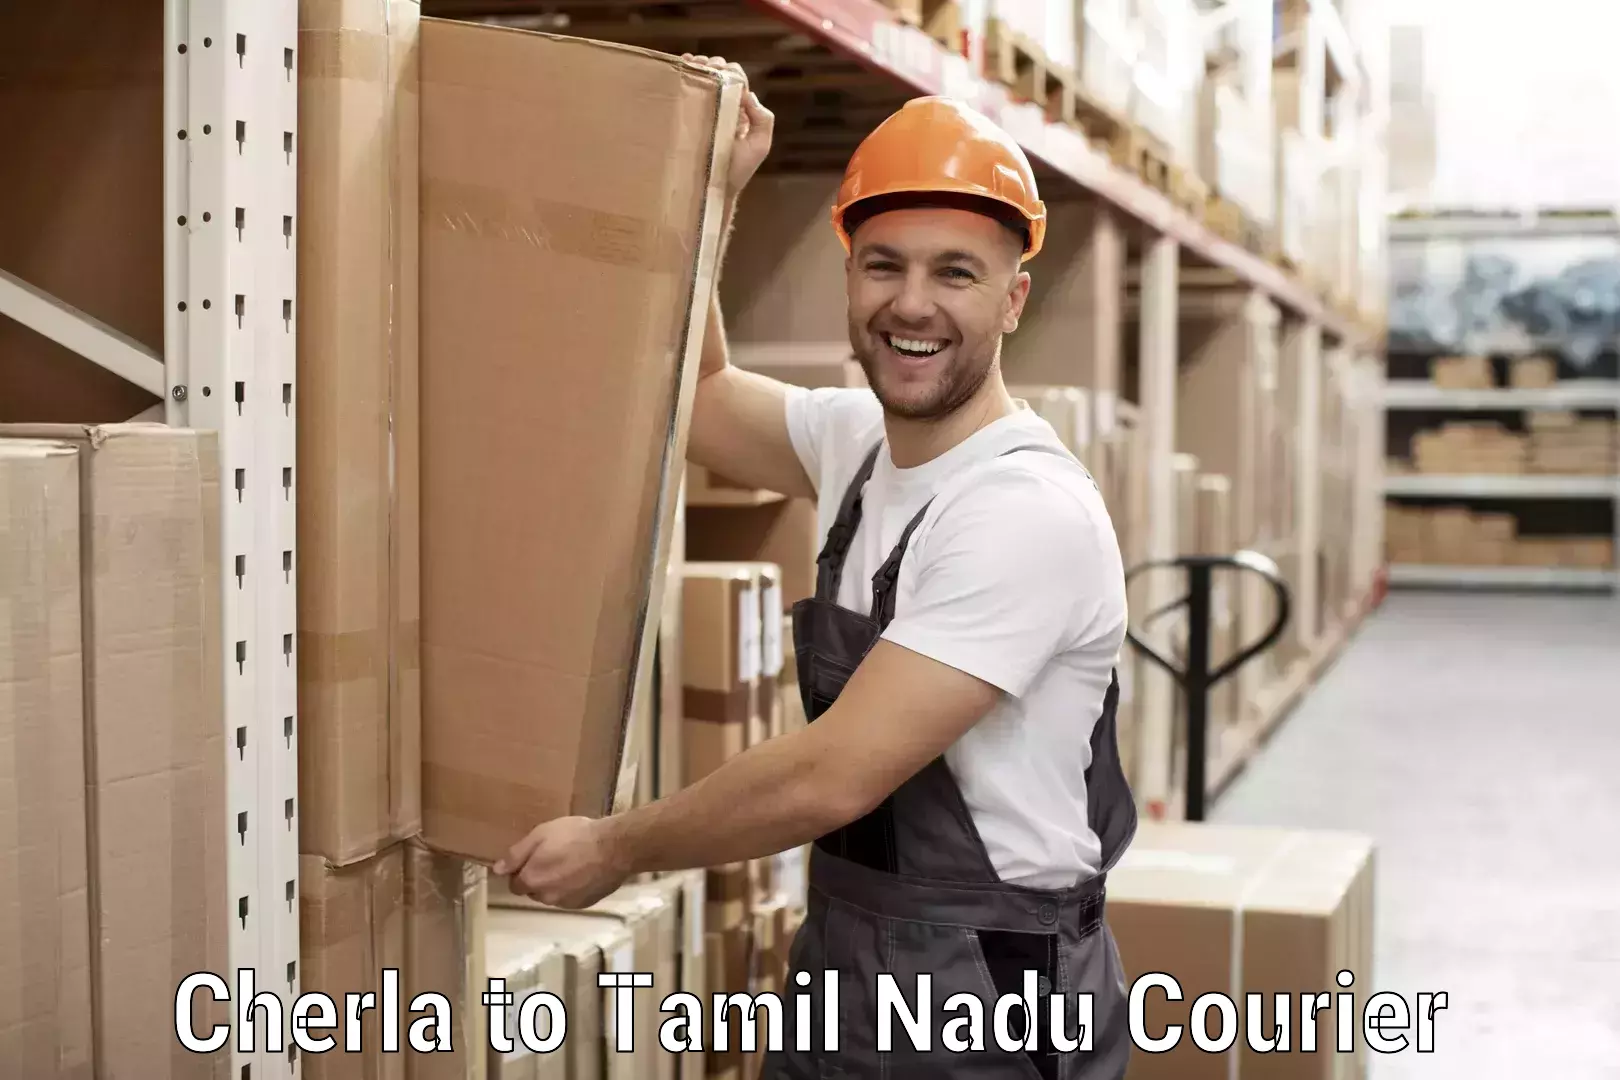 Customized delivery options Cherla to IIIT Tiruchirappalli